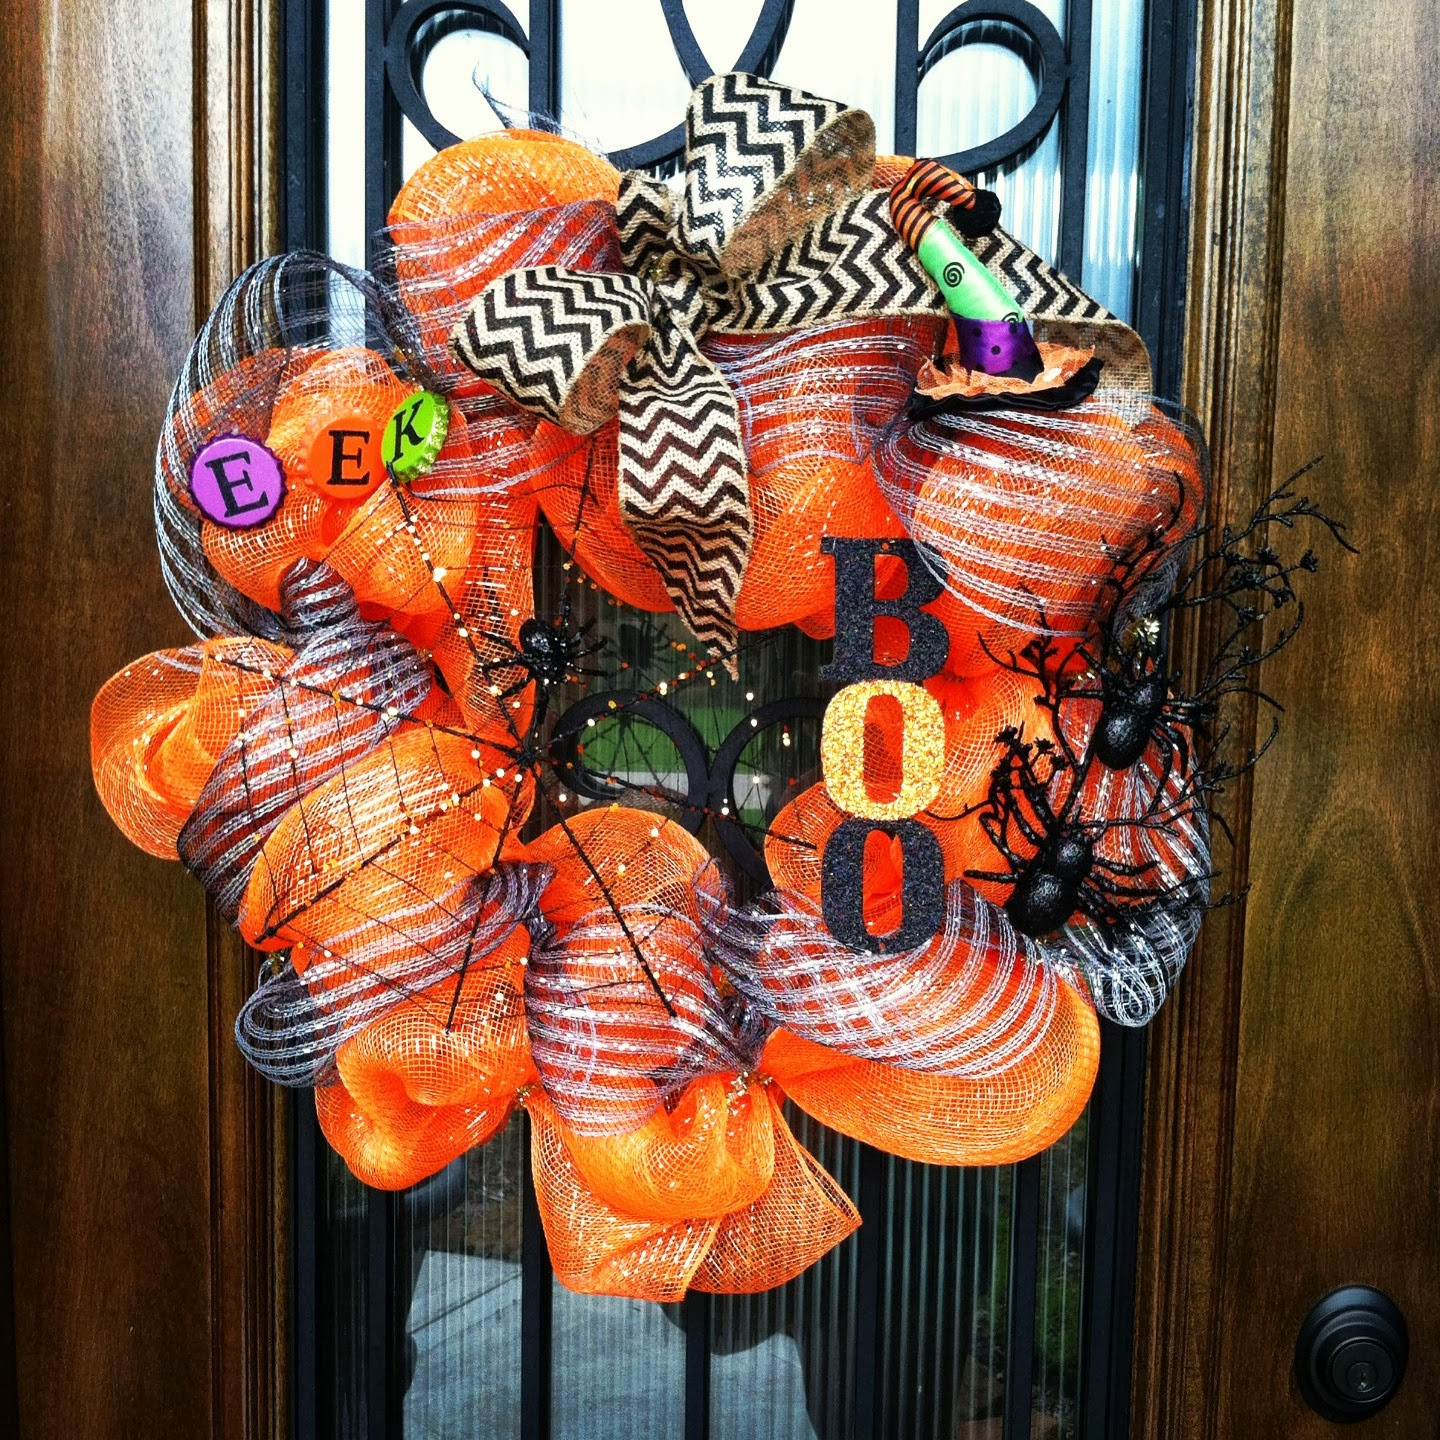 Best ideas about DIY Deco Mesh Wreath
. Save or Pin DIY Deco Mesh Halloween Wreath Now.